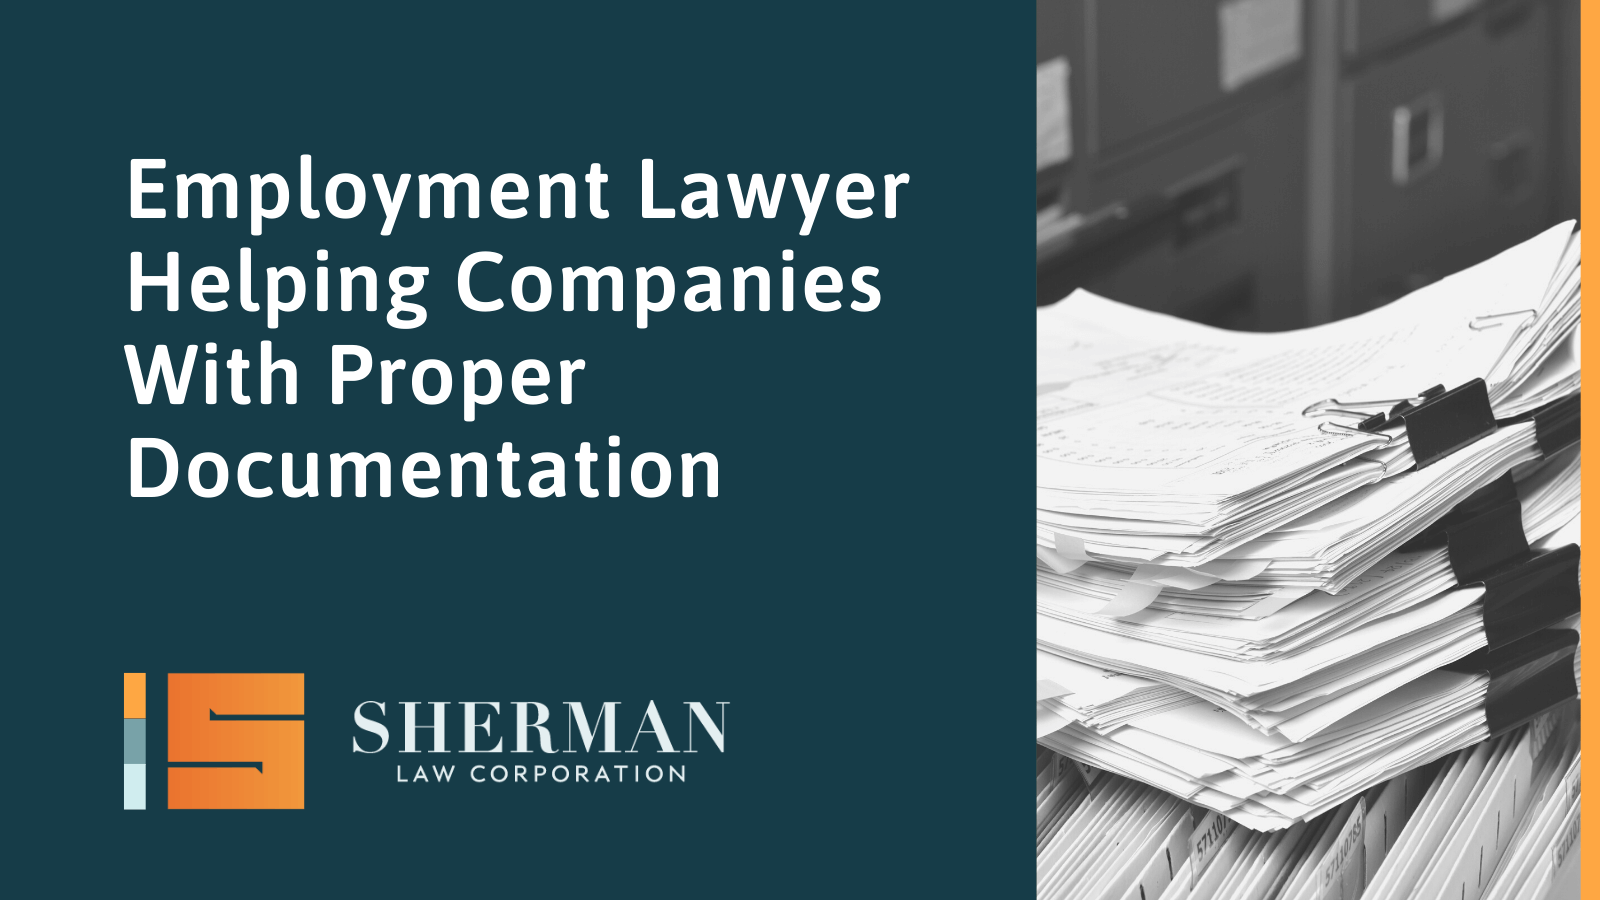 Employment Lawyer Helping Companies With Proper Documentation- california employment lawyer - sherman law corporation